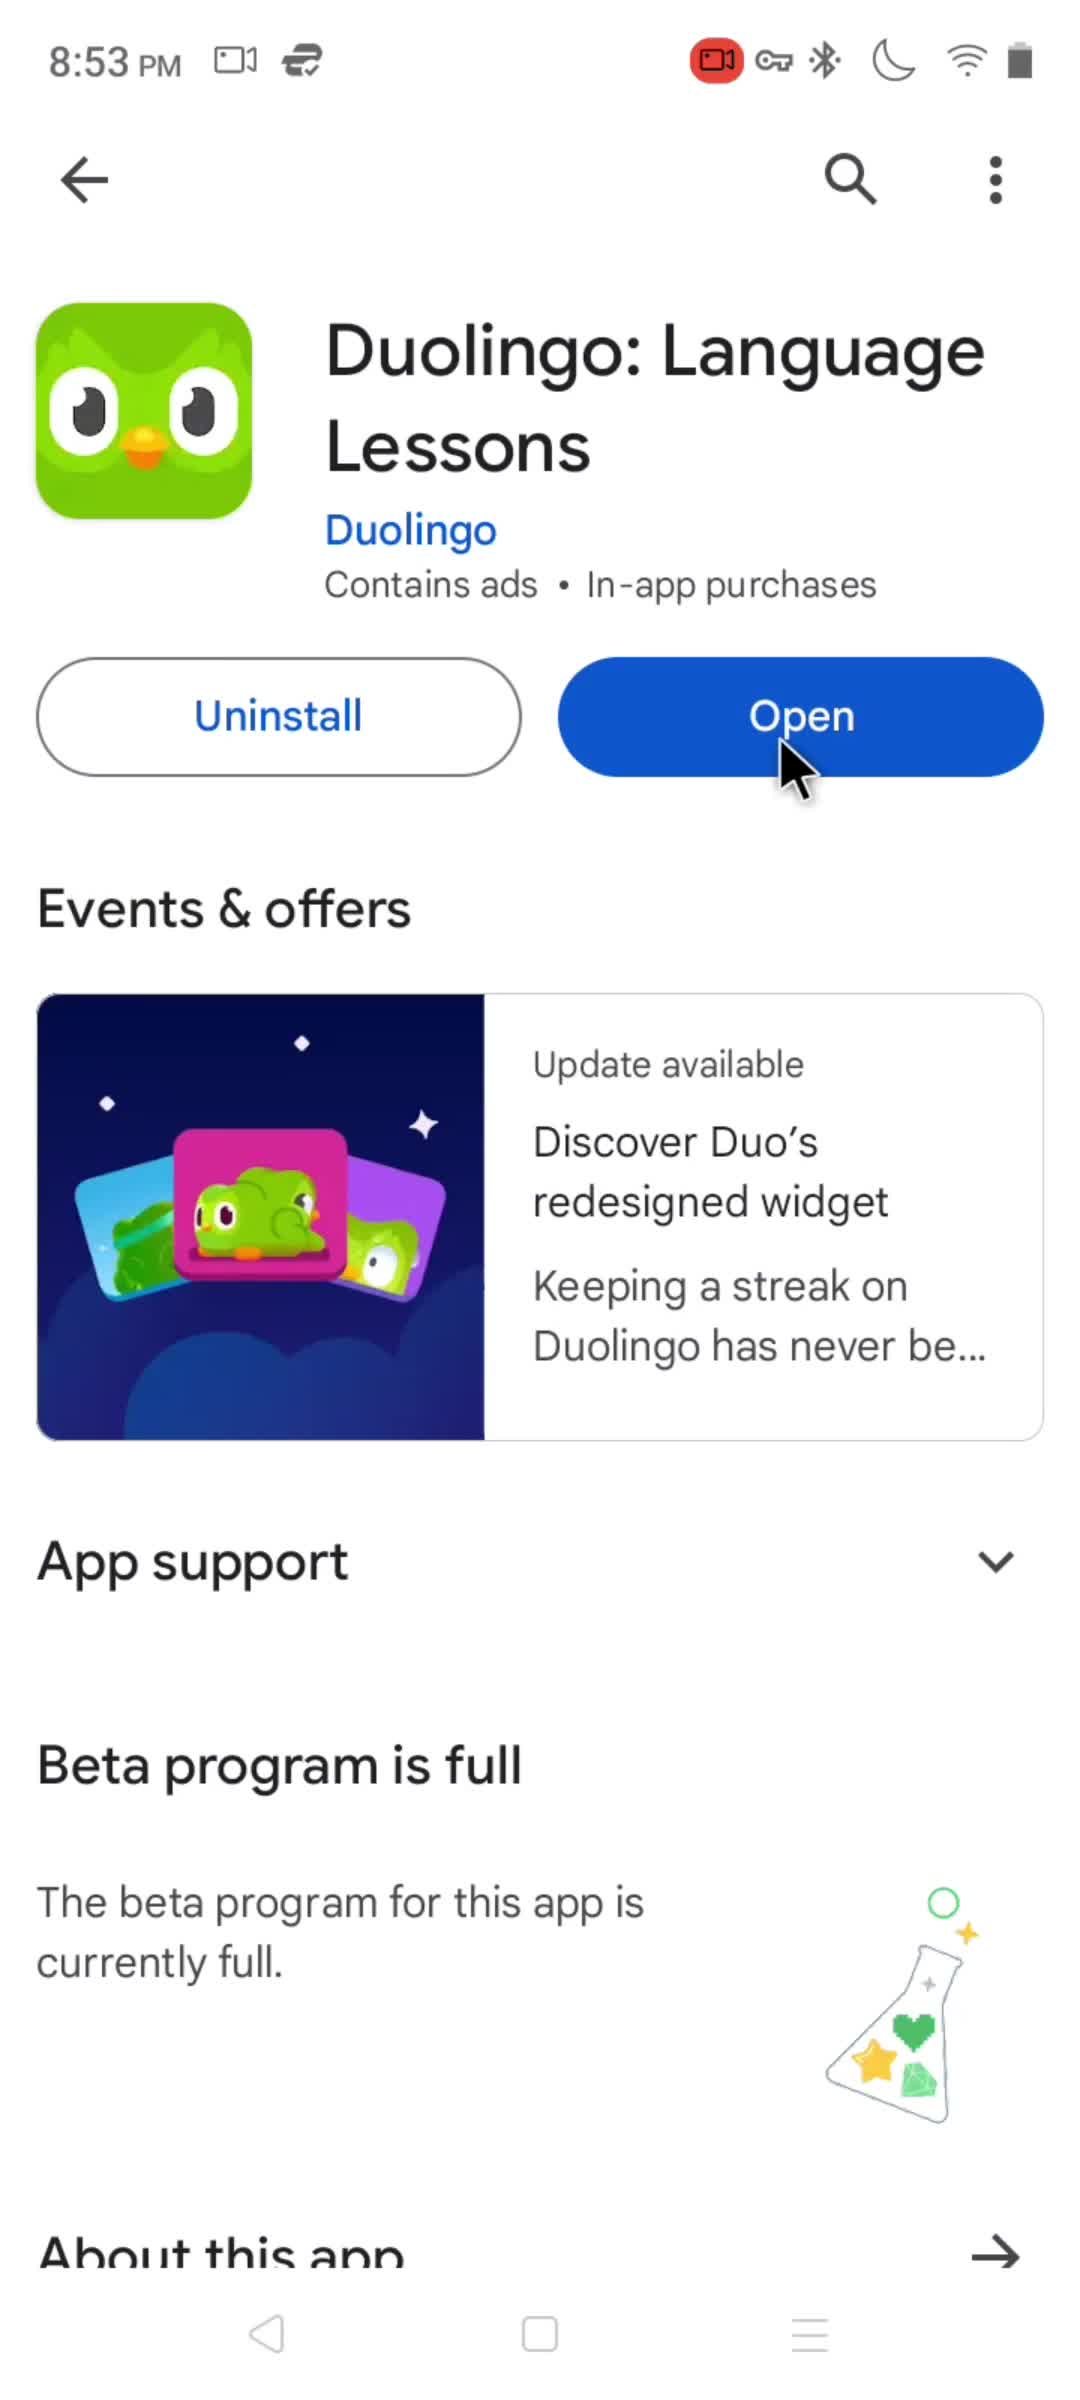 Duolingo play store page screenshot